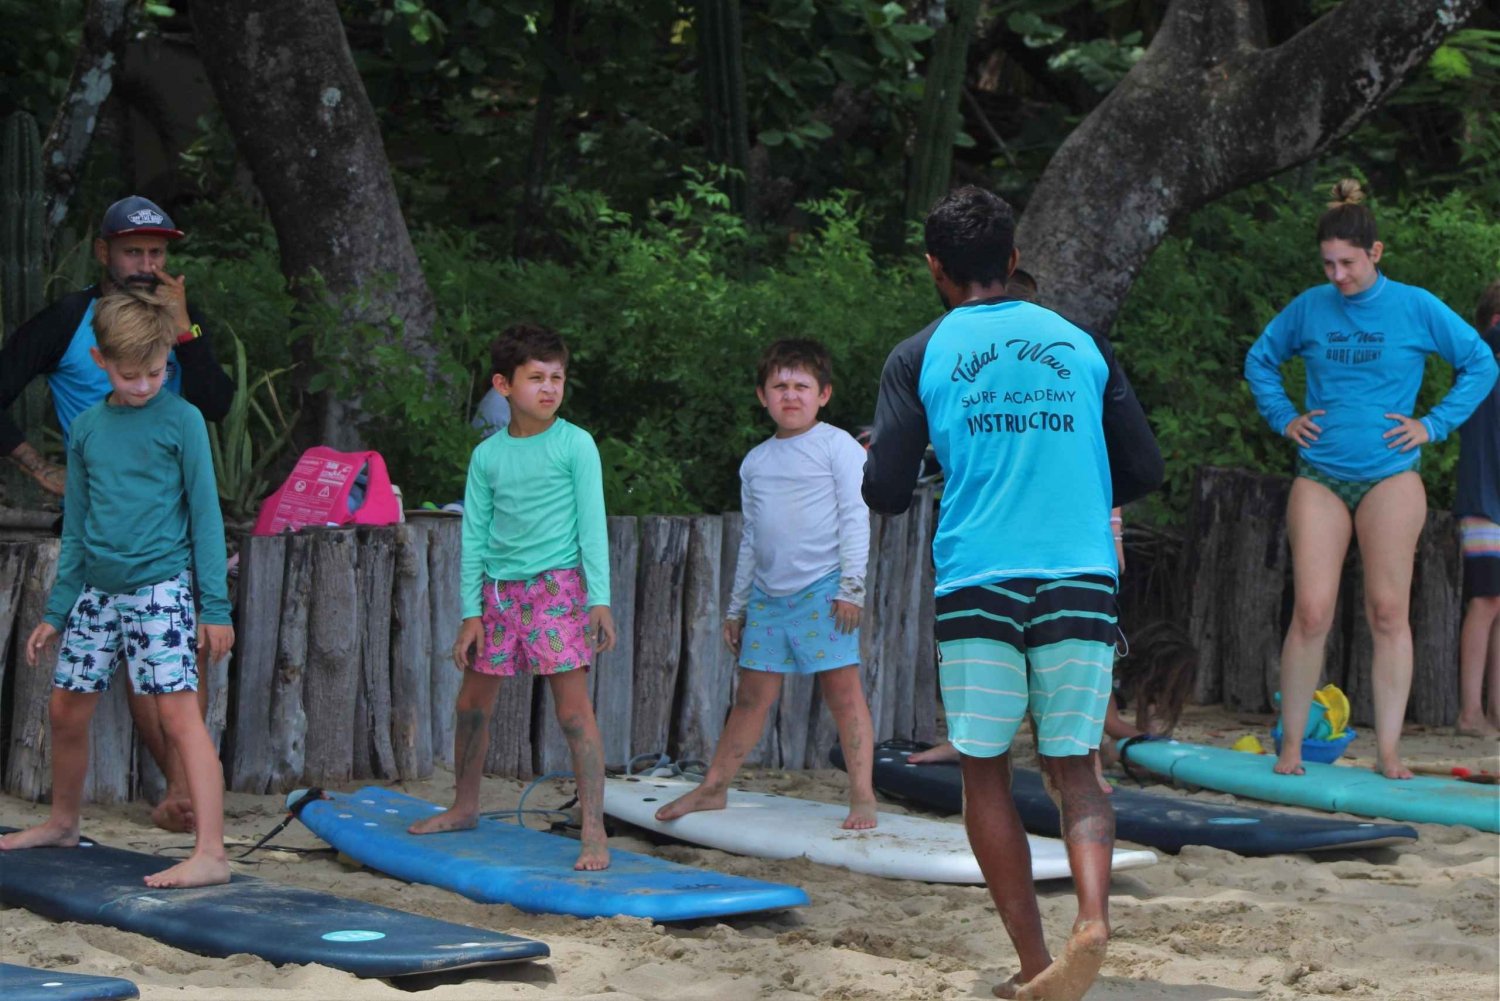 Surffitunnit Tamarindossa Tidal Wave Surf Academyllä